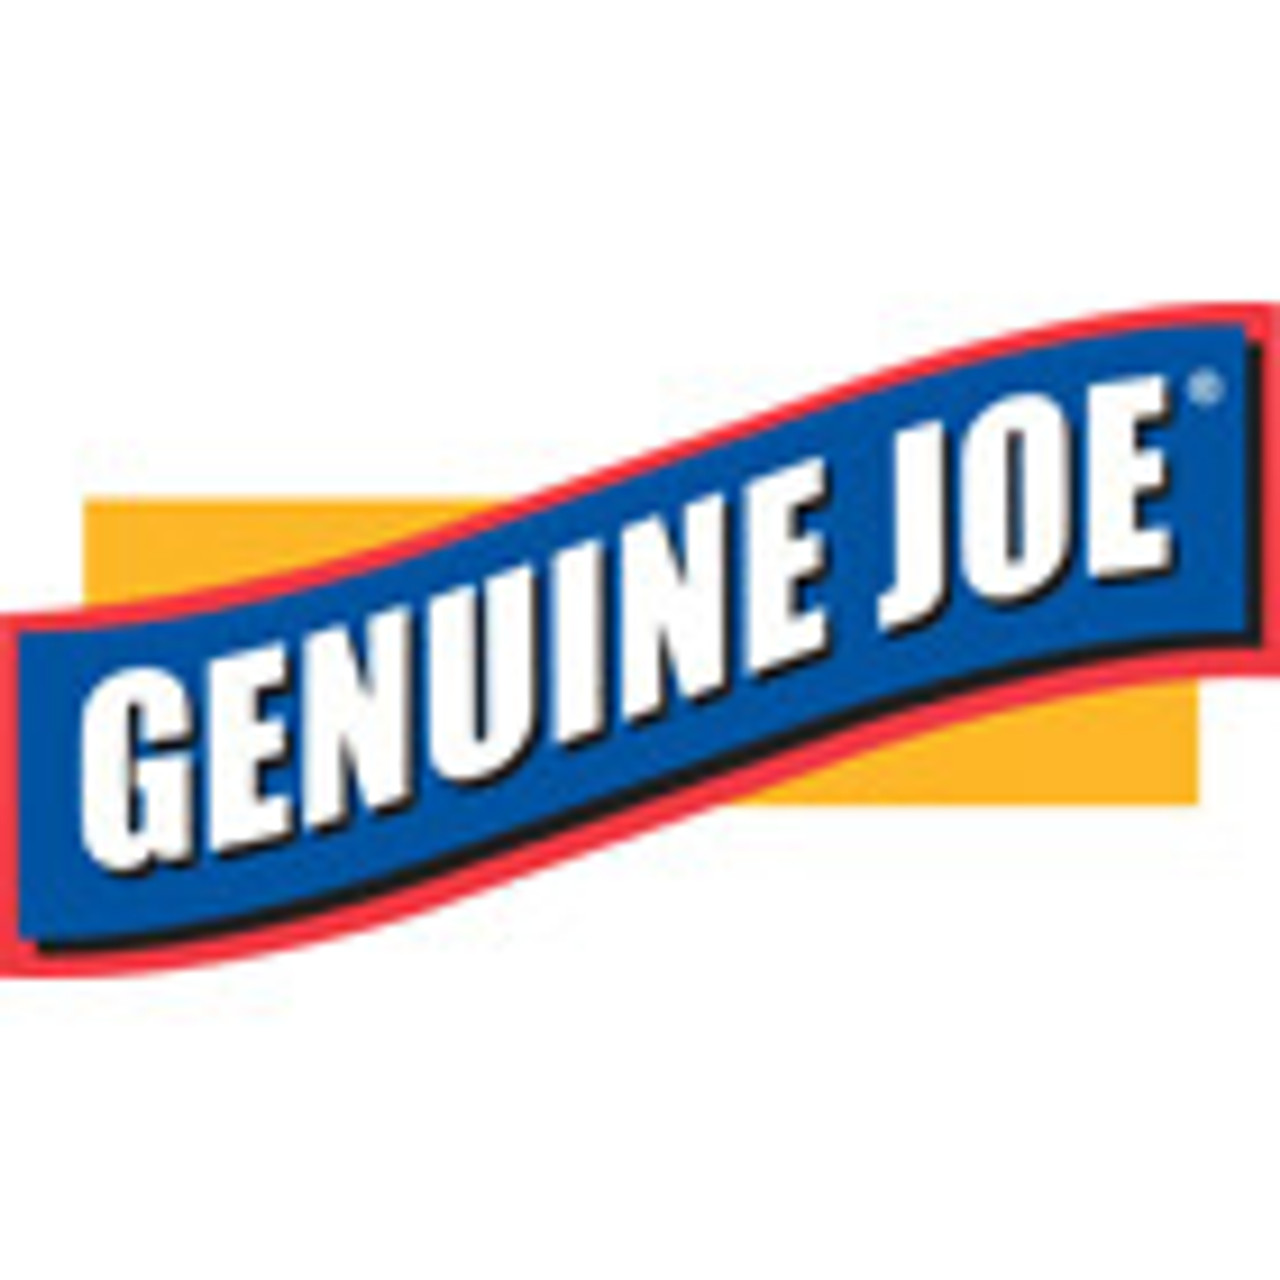 Everyday Genuine Joe